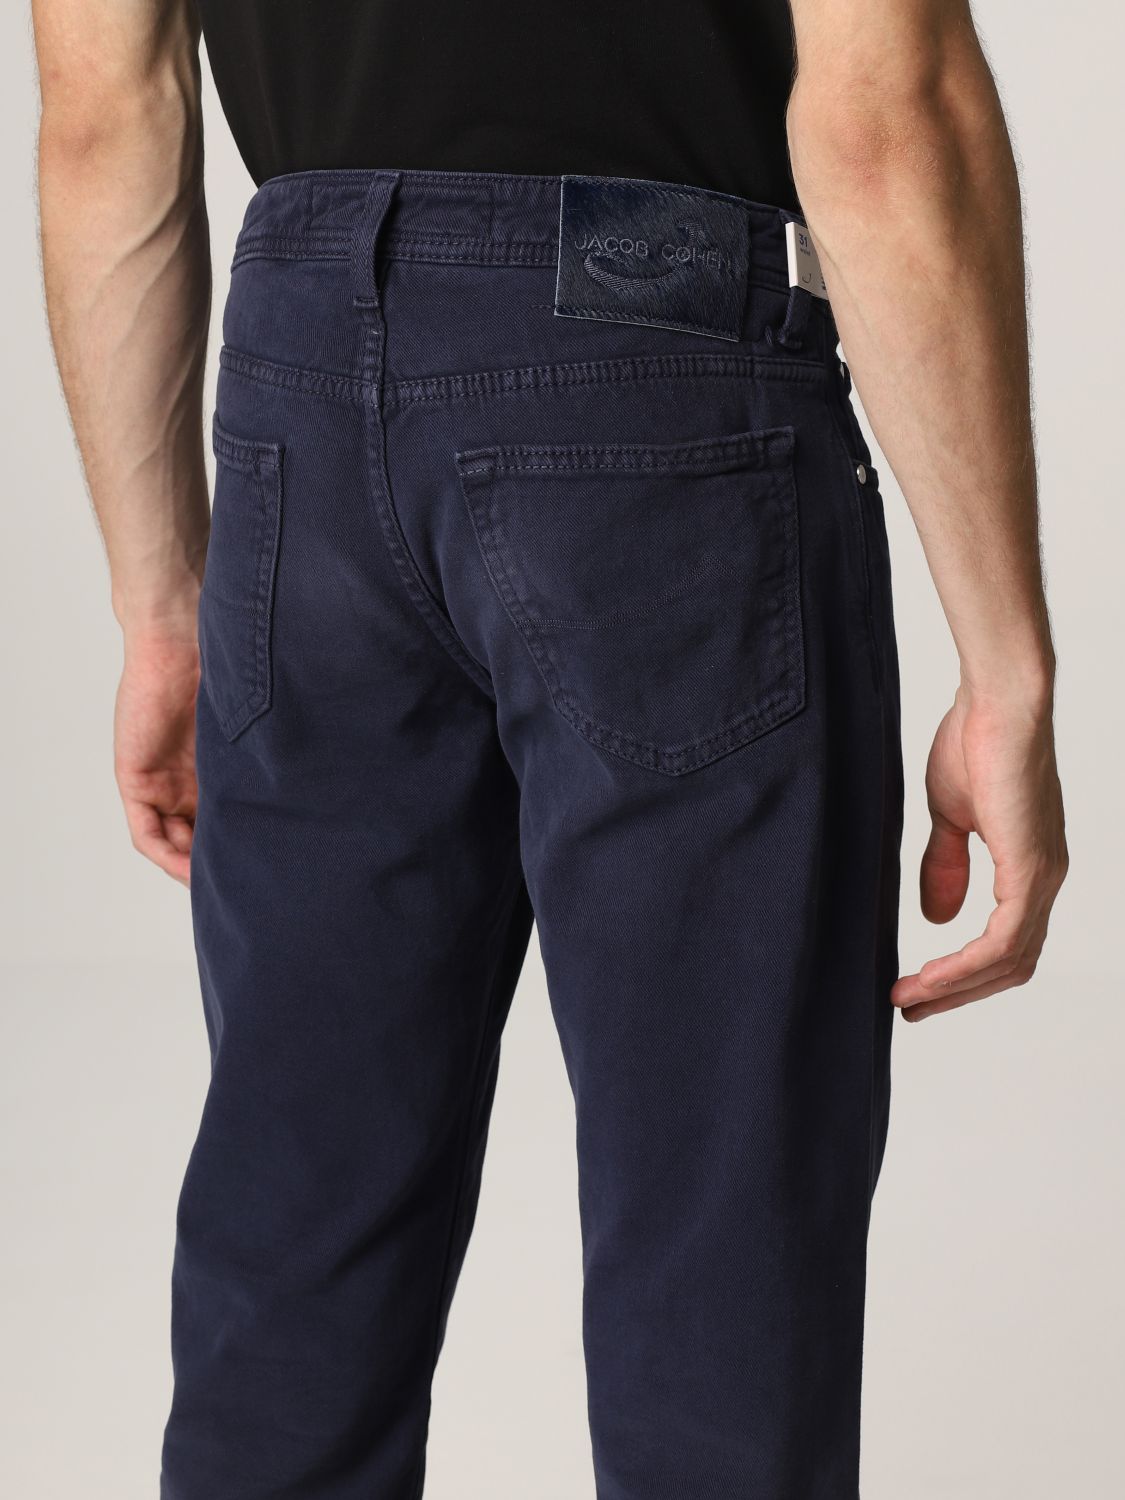 Jeans Jacob Cohen: Pantalone Jacob Cohën in cotone blue 1 3